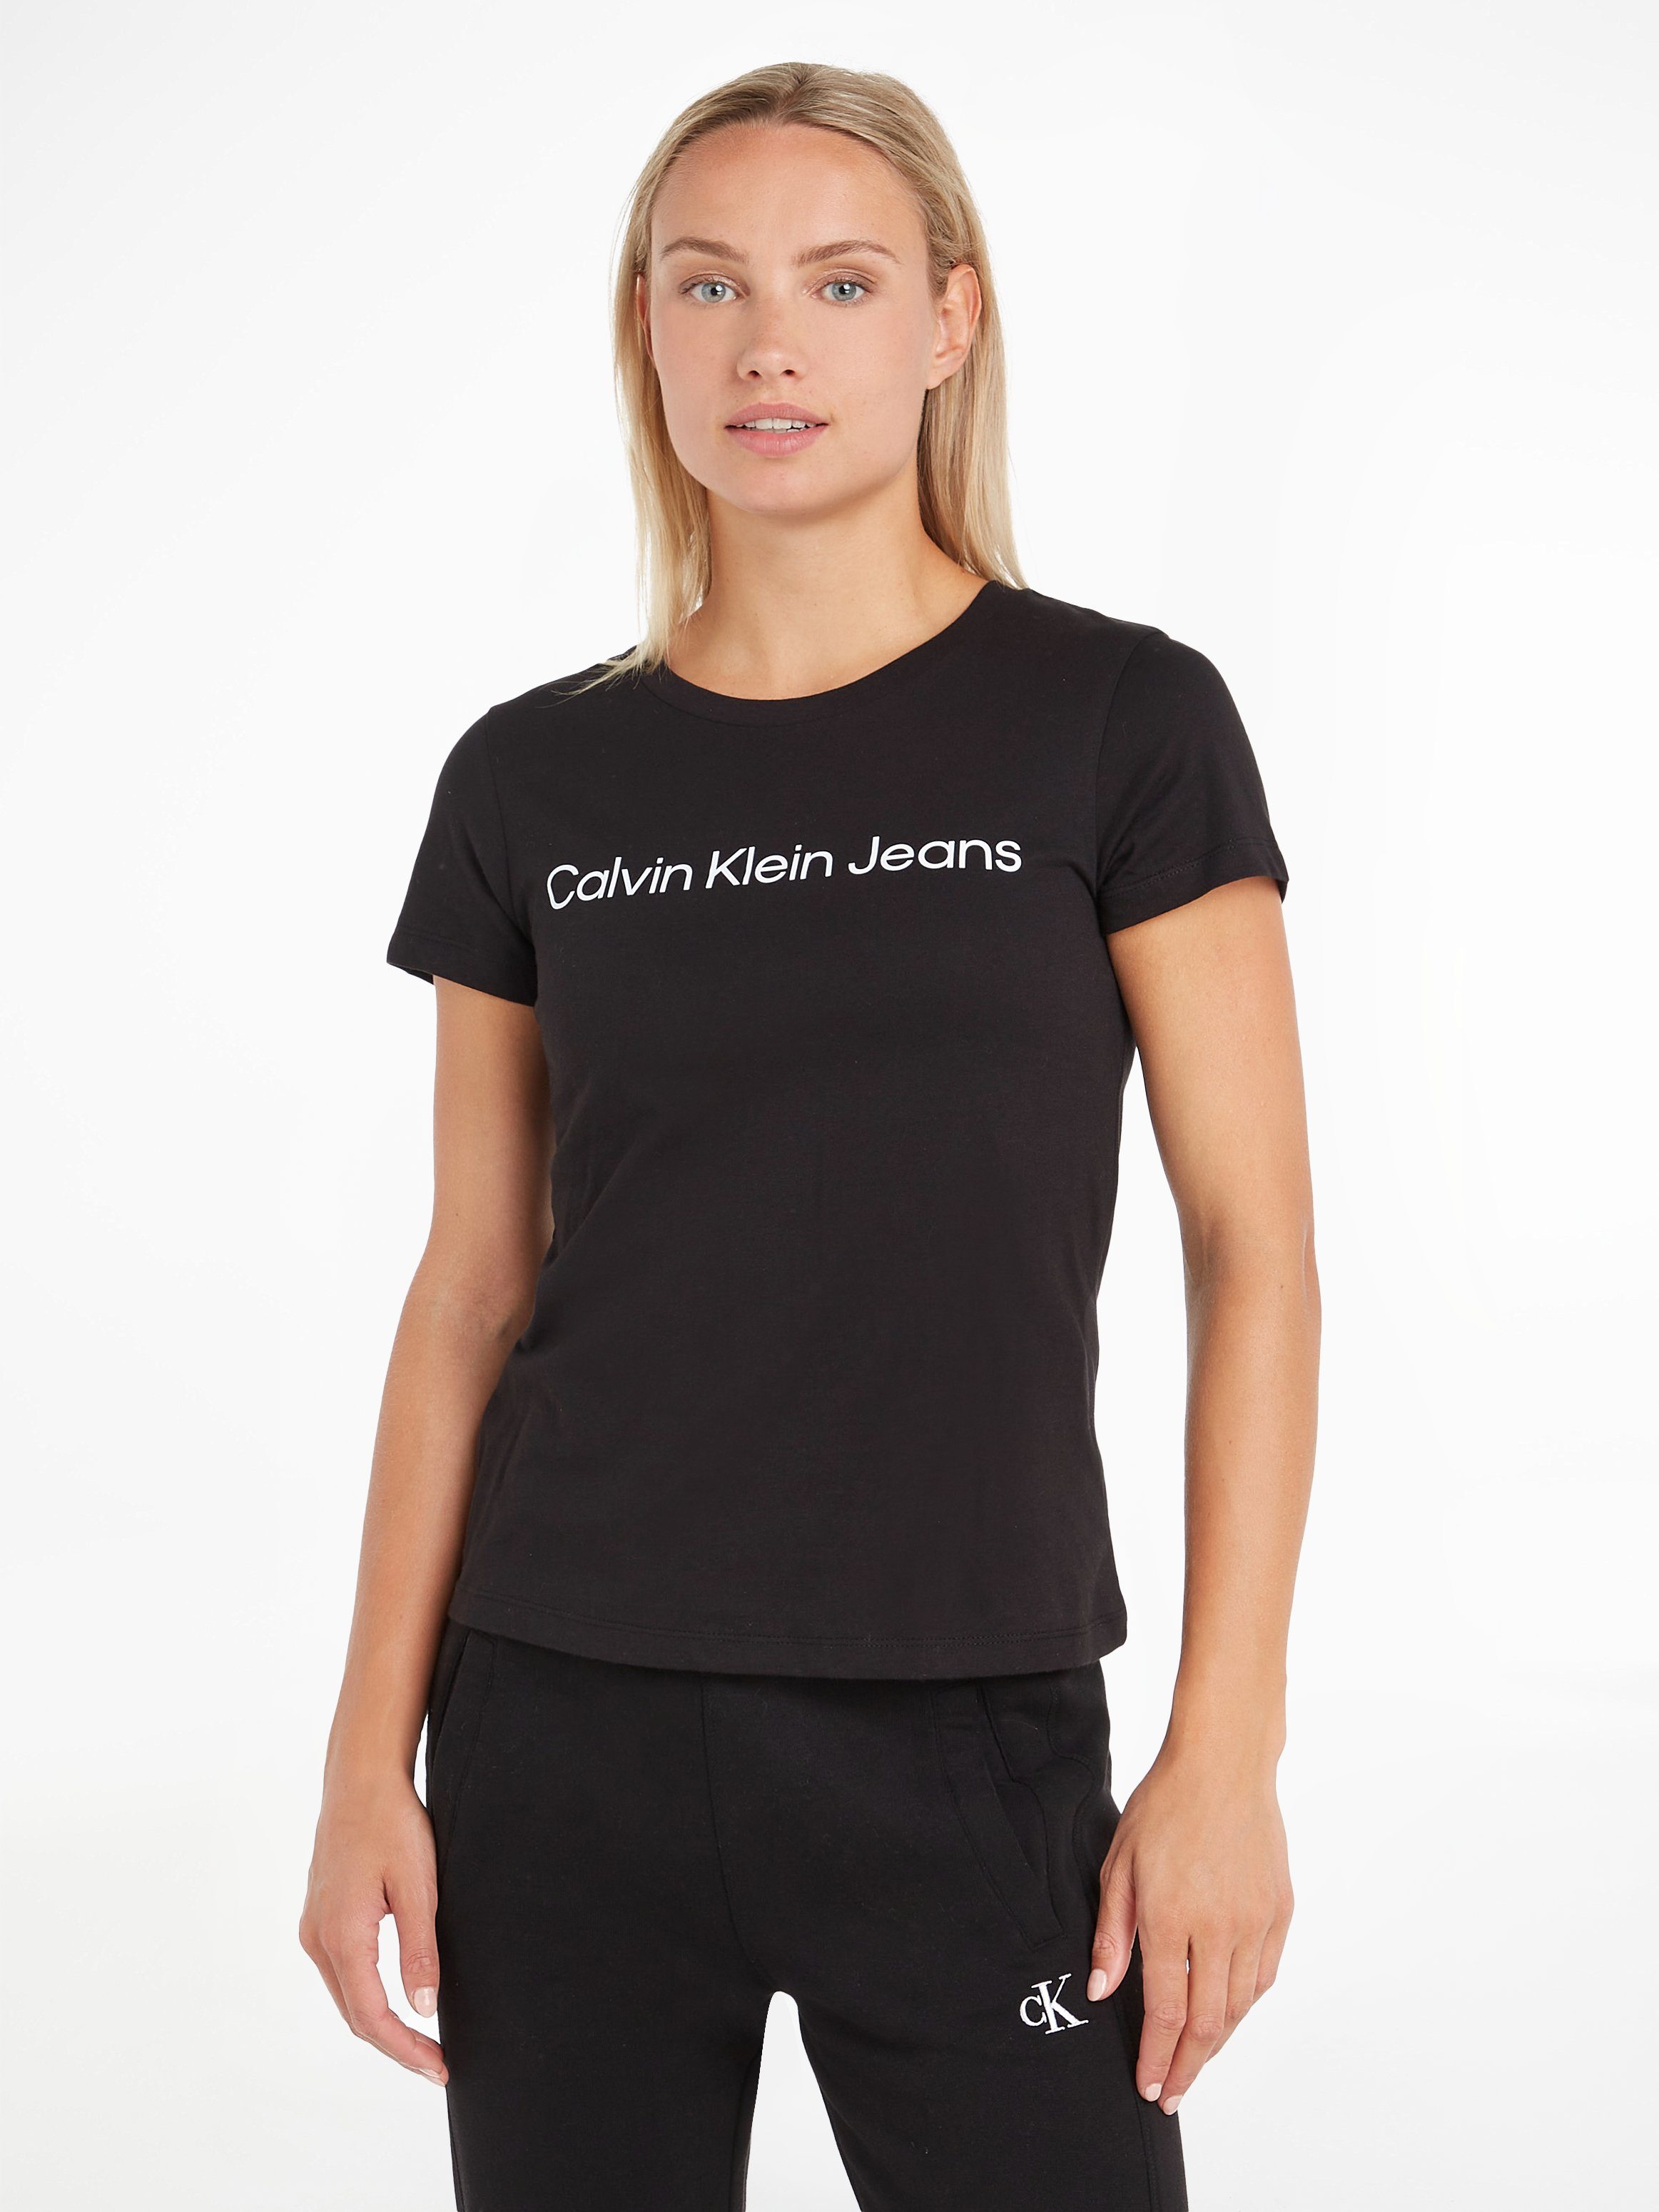 TEE FIT CK- Jeans Calvin SLIM mit T-Shirt INSTIT LOGO CORE Logoschriftzug Klein